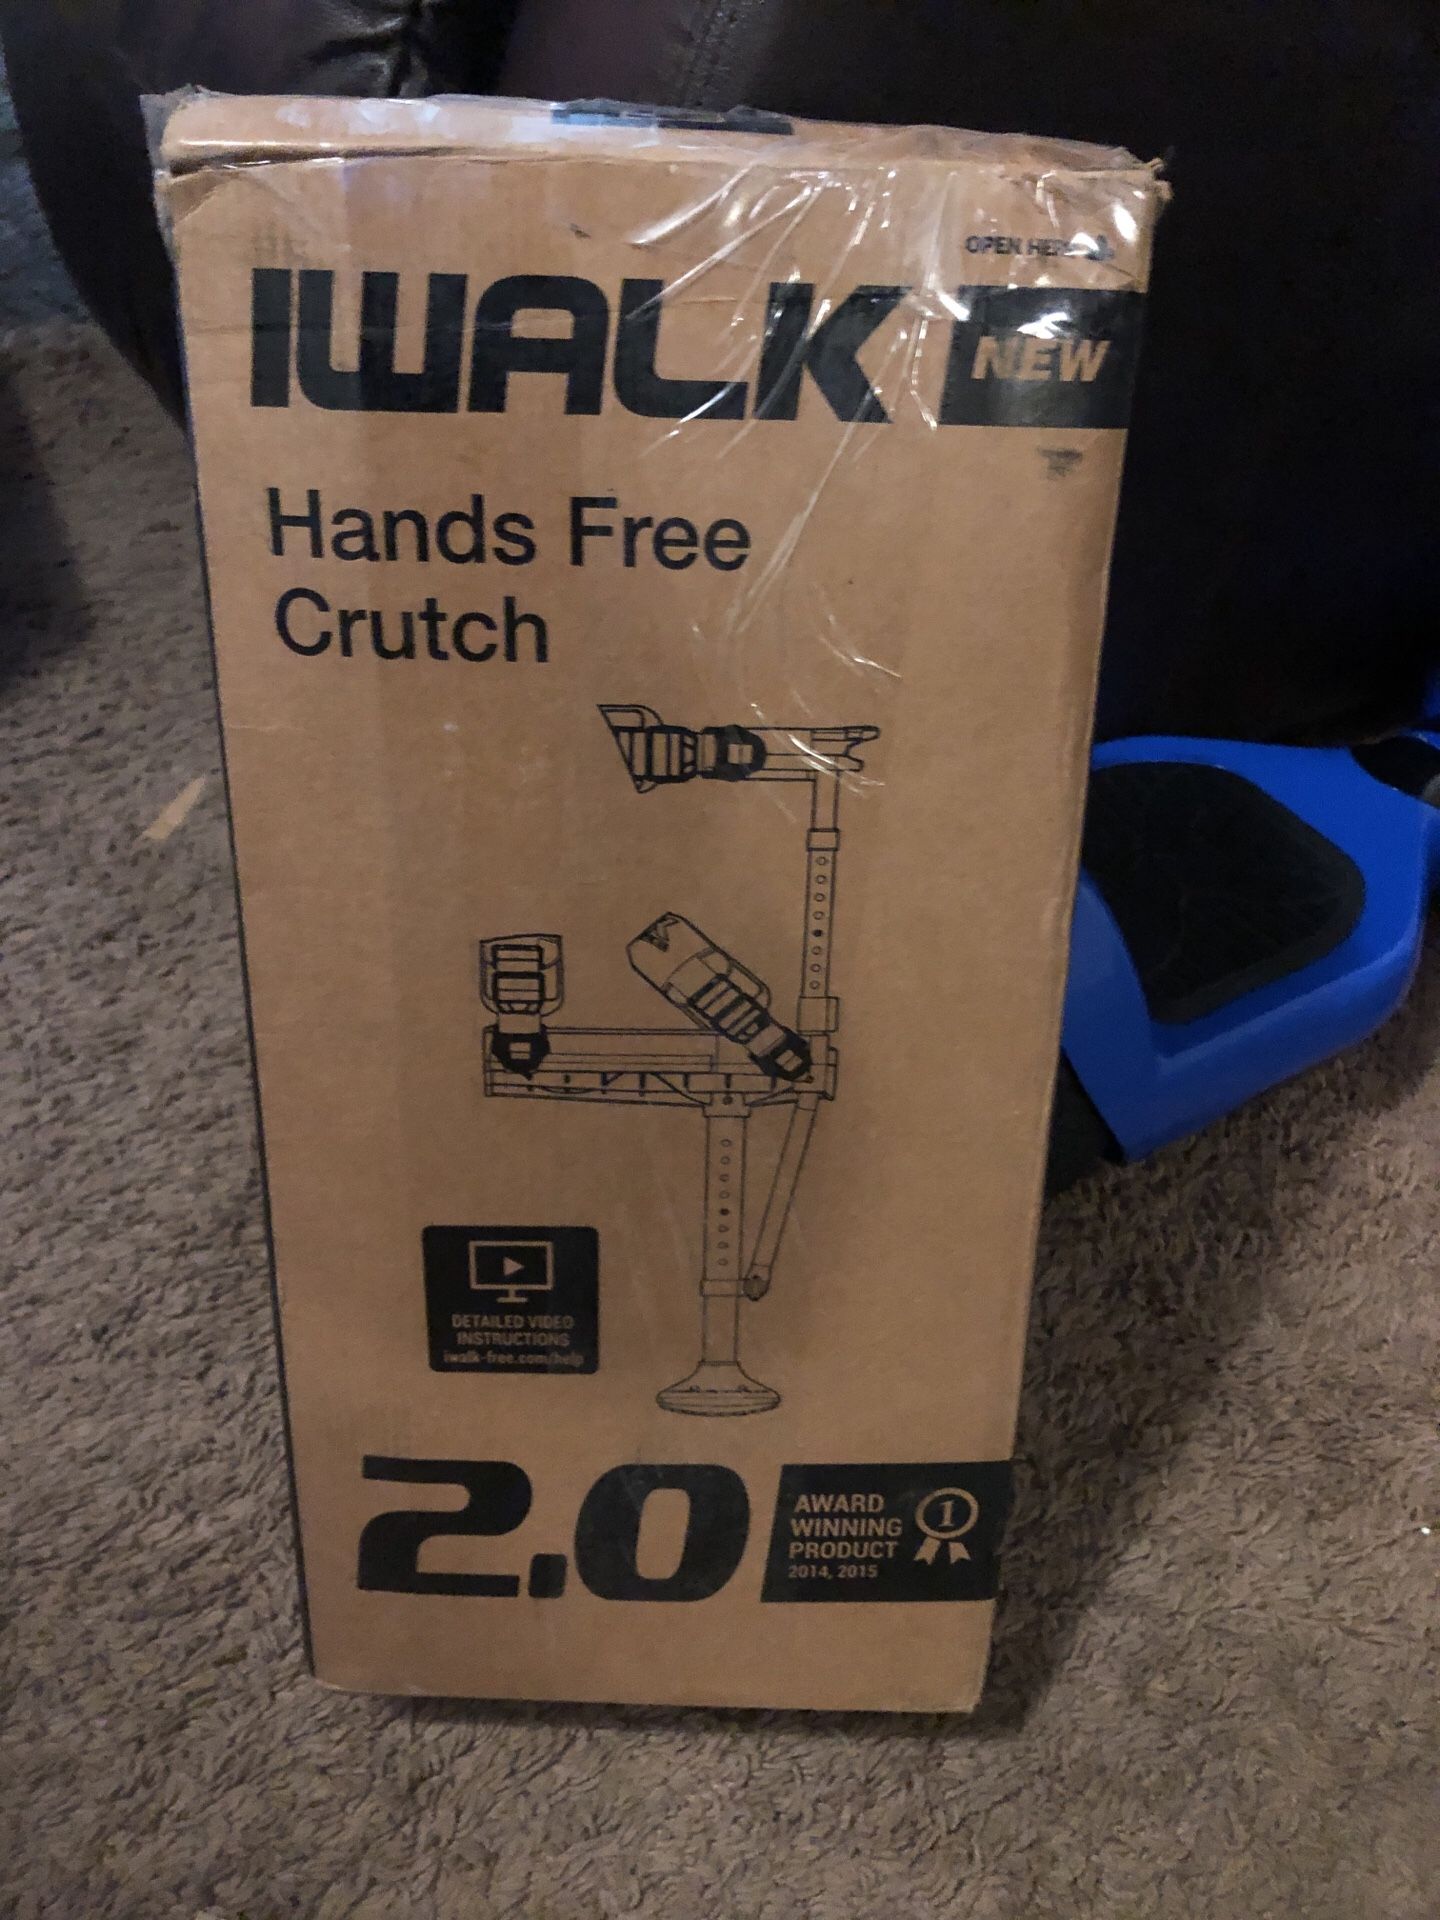 Hands free crutch